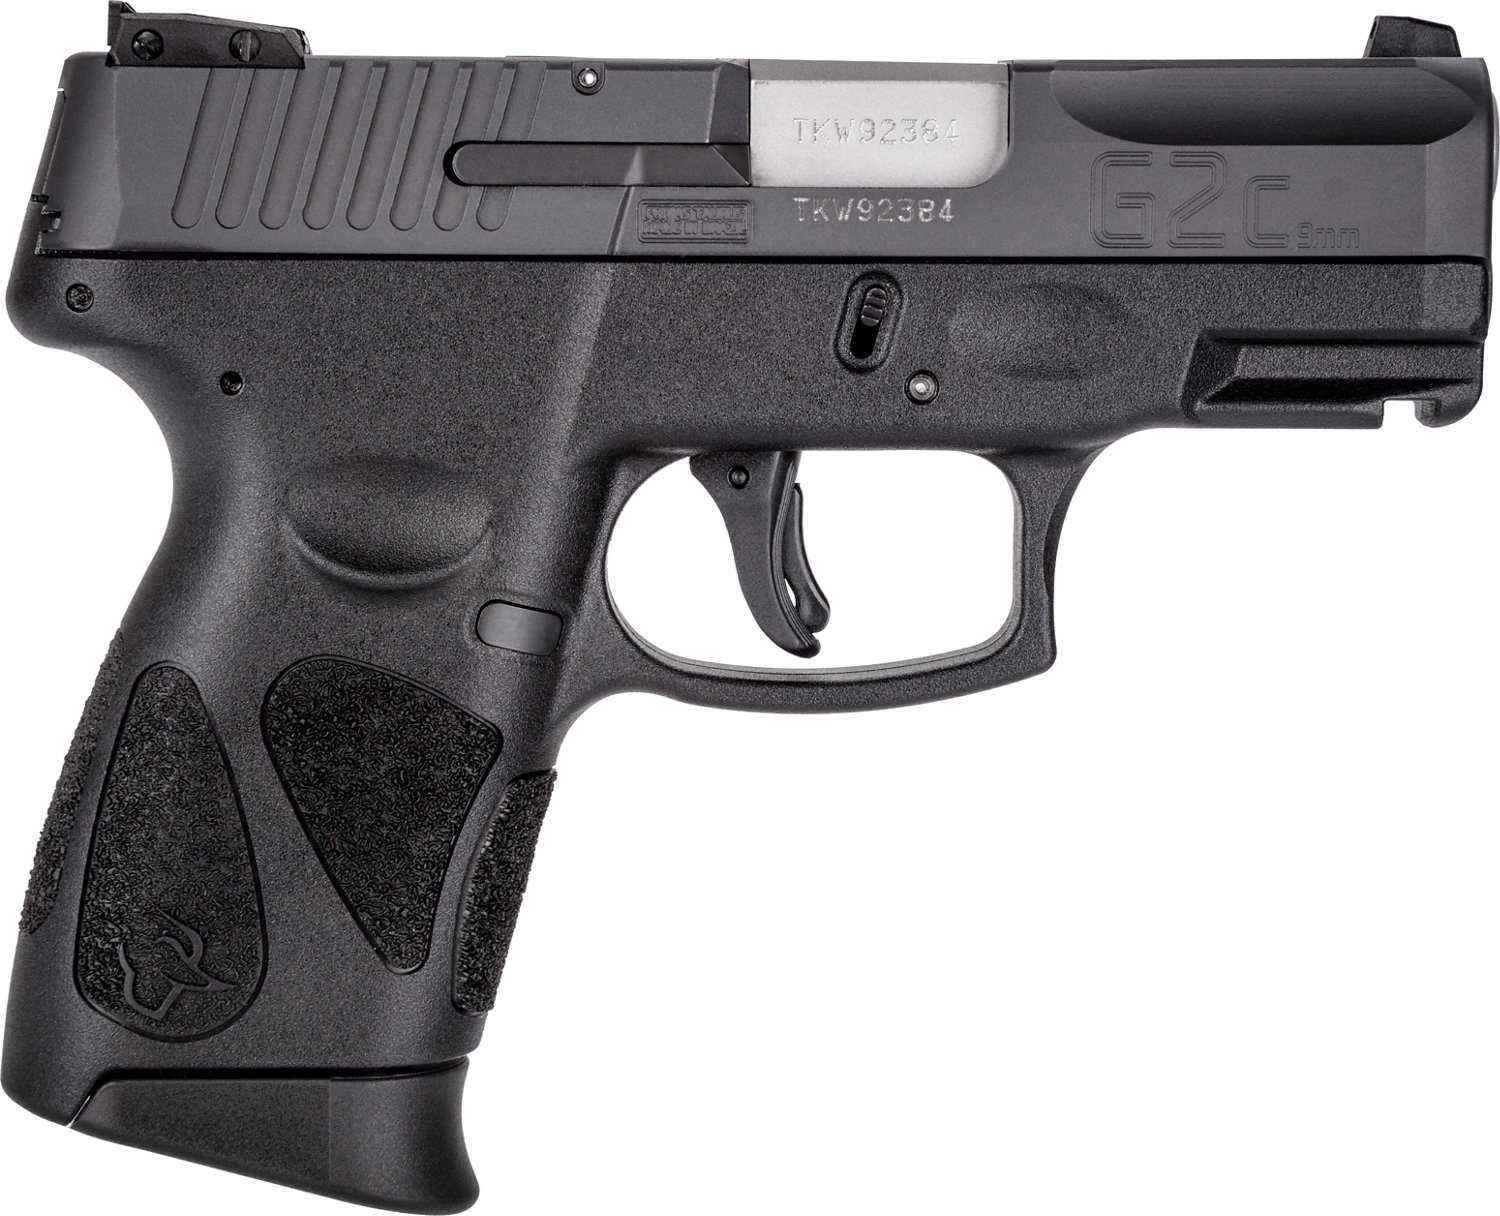 taurus-g2c-9mm-pistol-academy